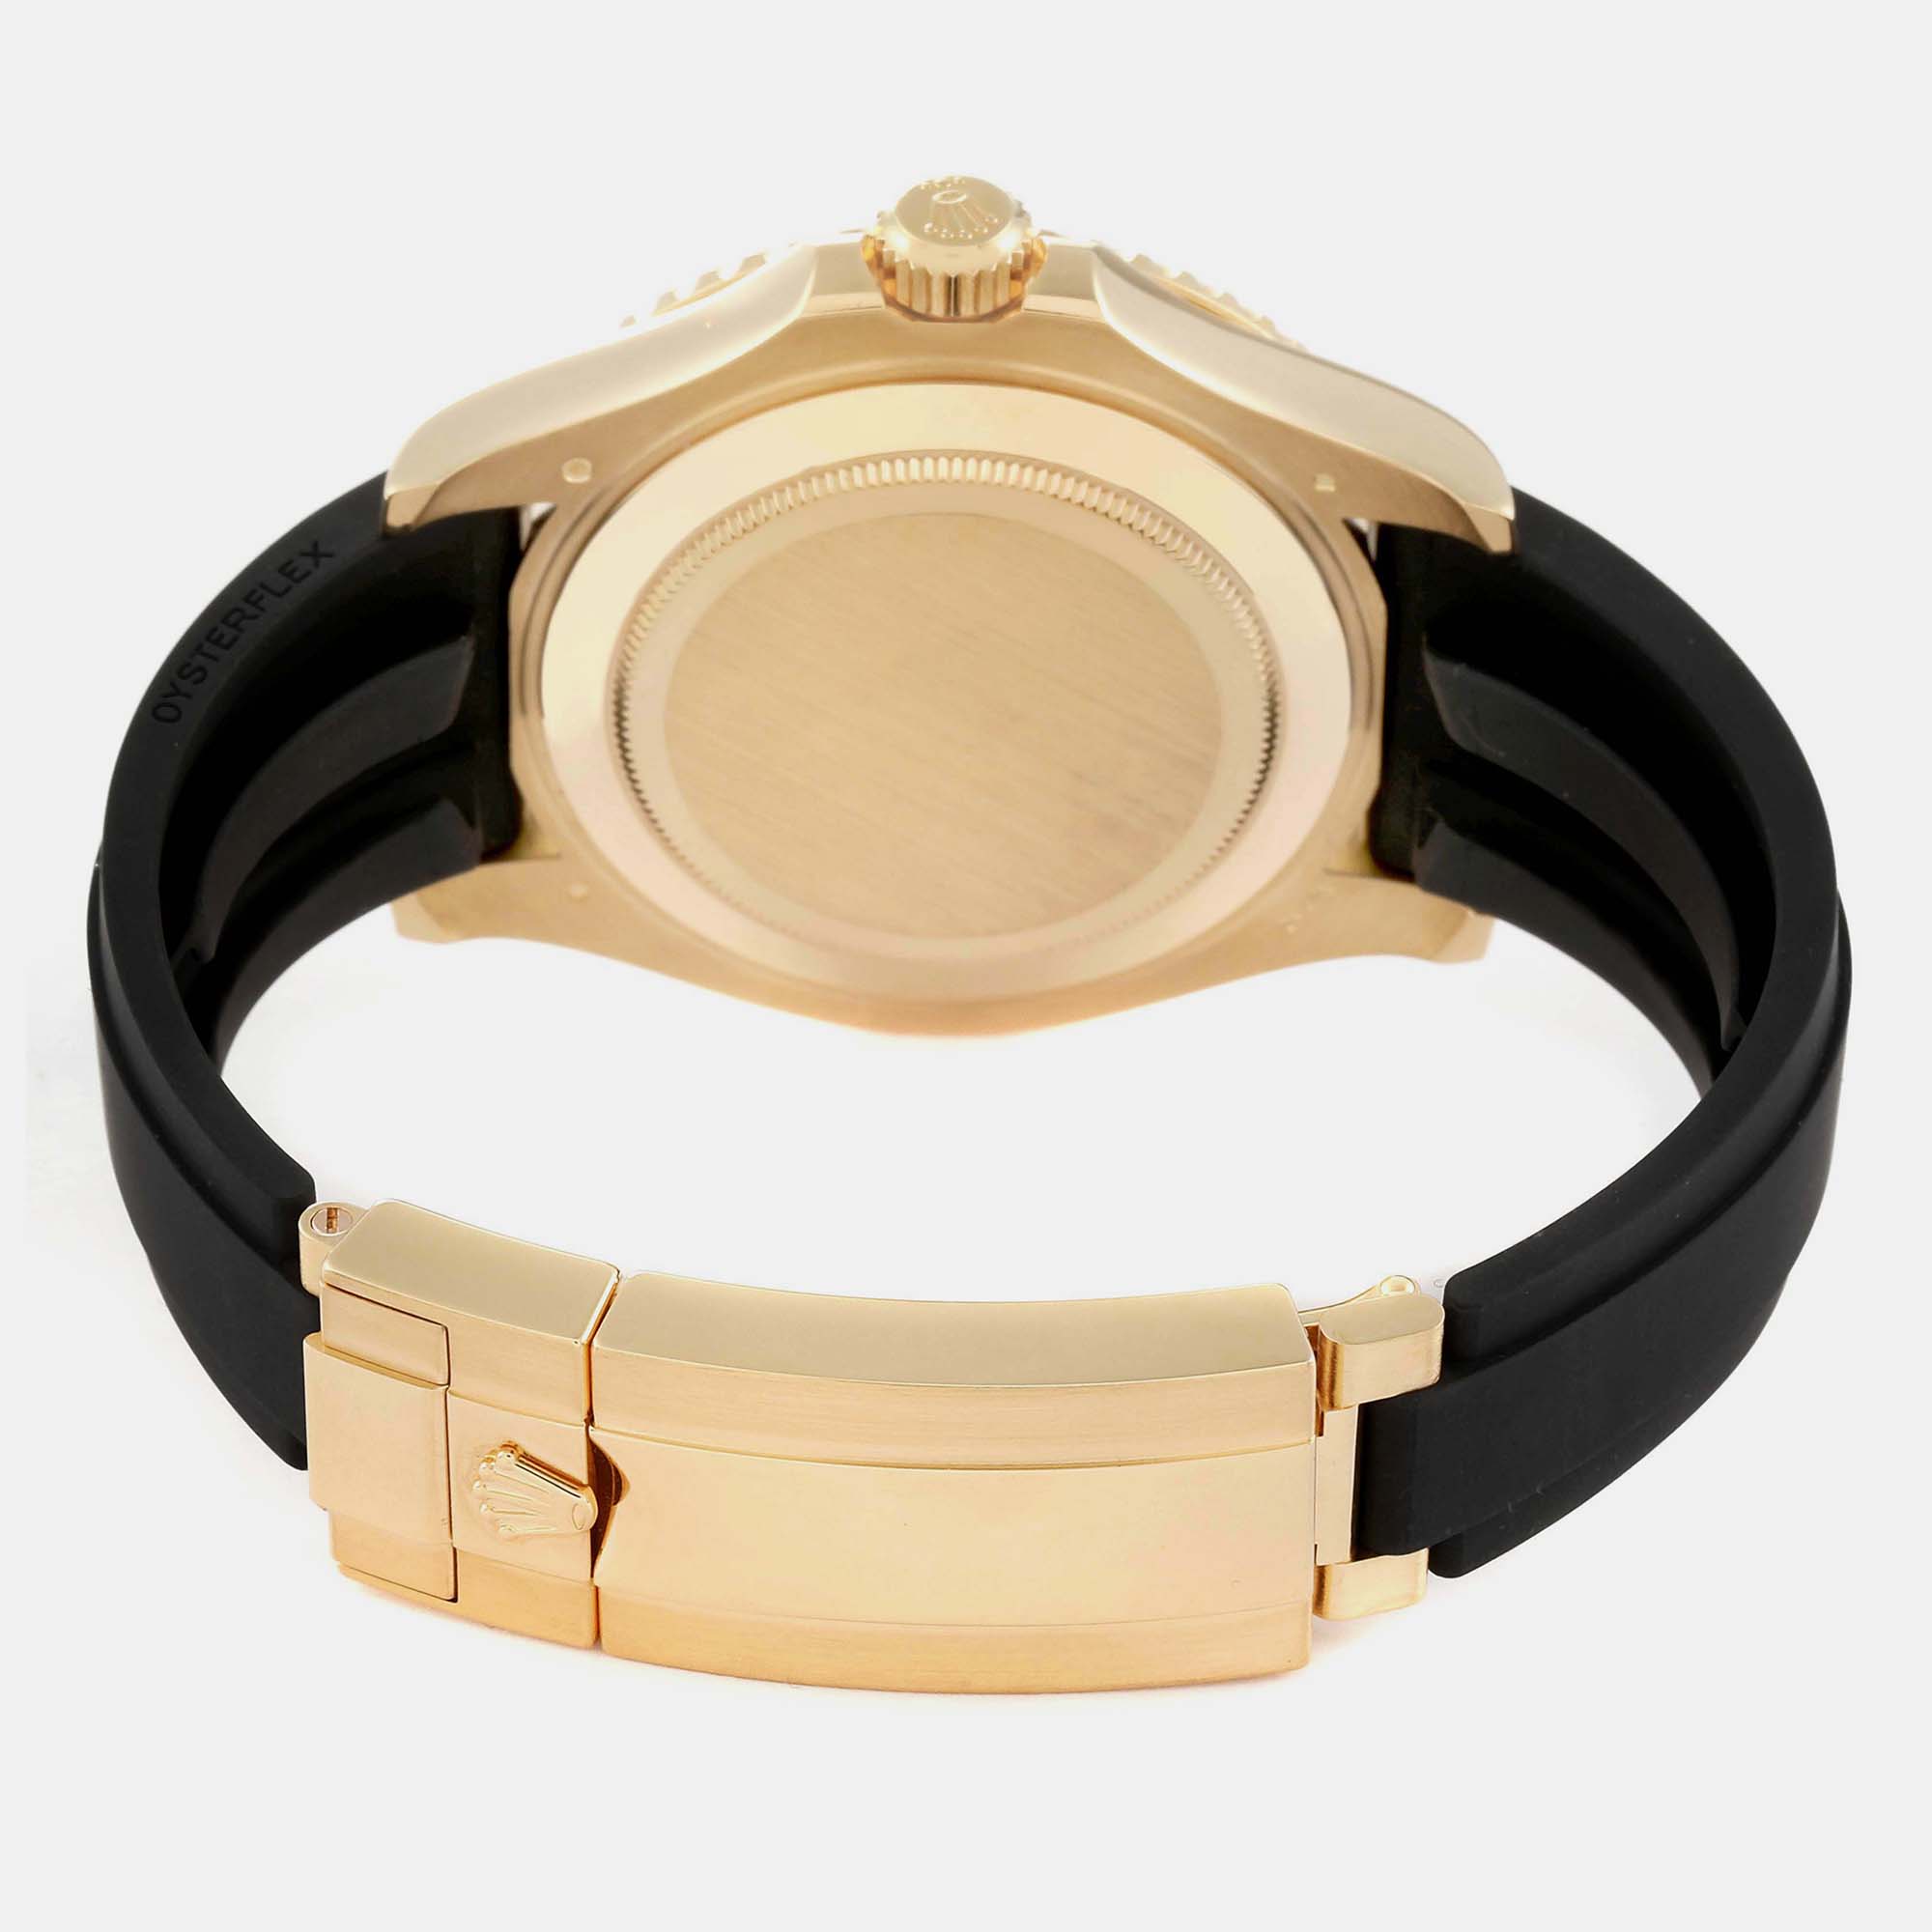 Rolex Yacht-Master Yellow Gold Oysterflex Bracelet Men's Watch 226658 42 Mm